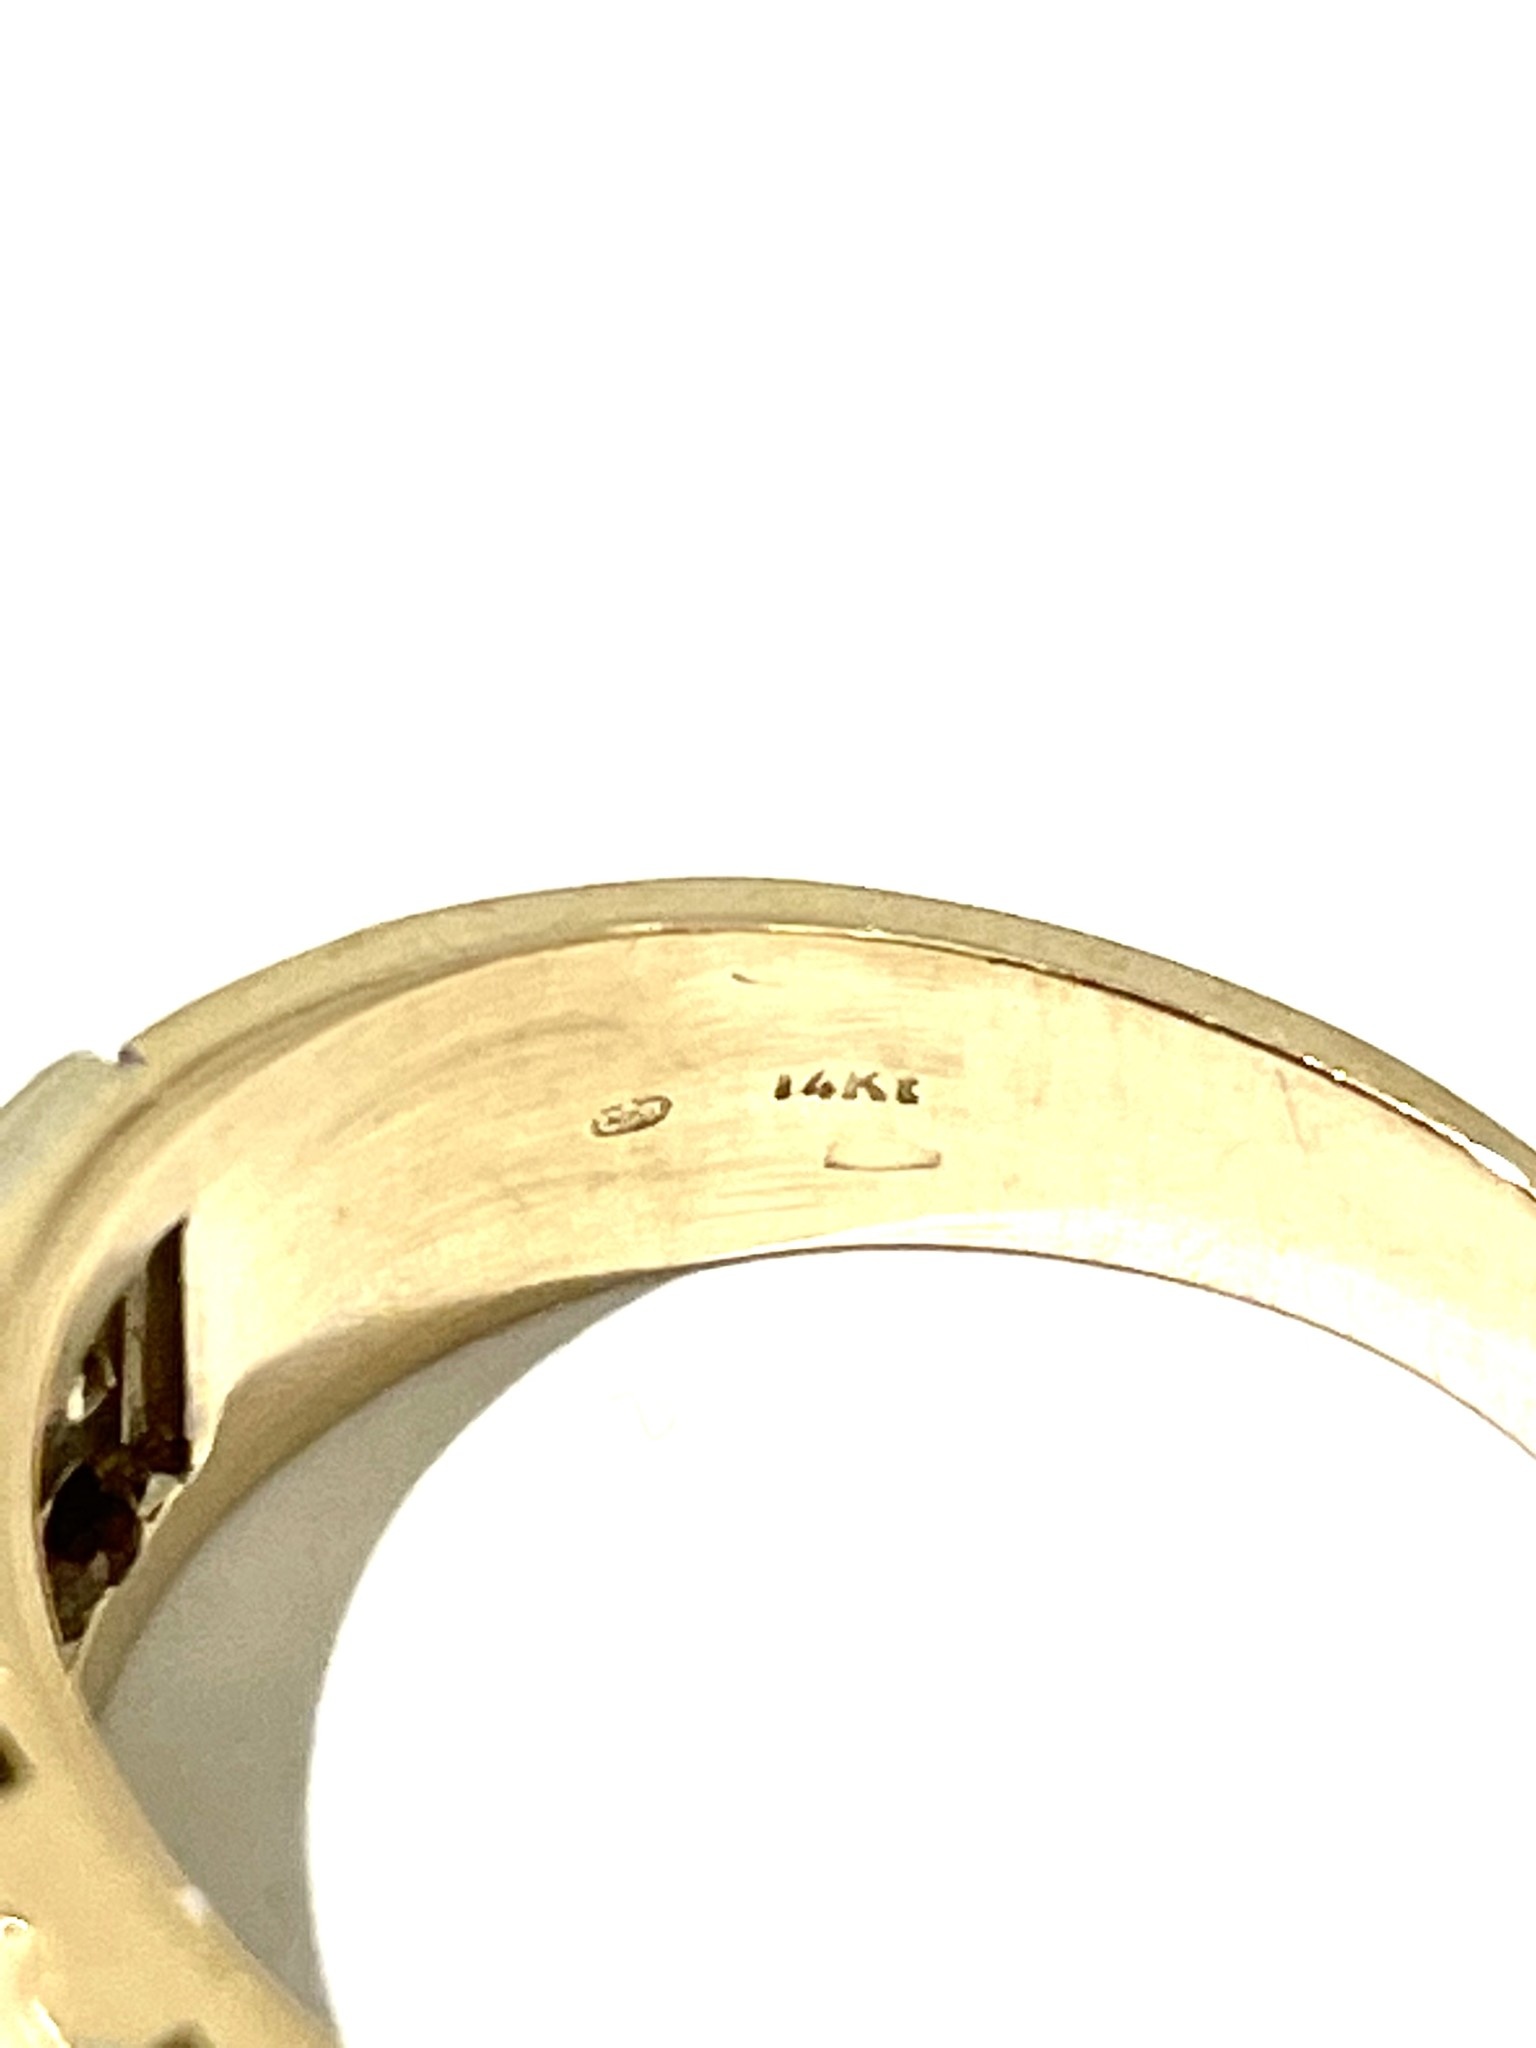 Vintage 14ct Yellow and White Gold Diamond Band Ring 9.6g - 14 Diamonds = 0.28ct H/VS - c1970-2